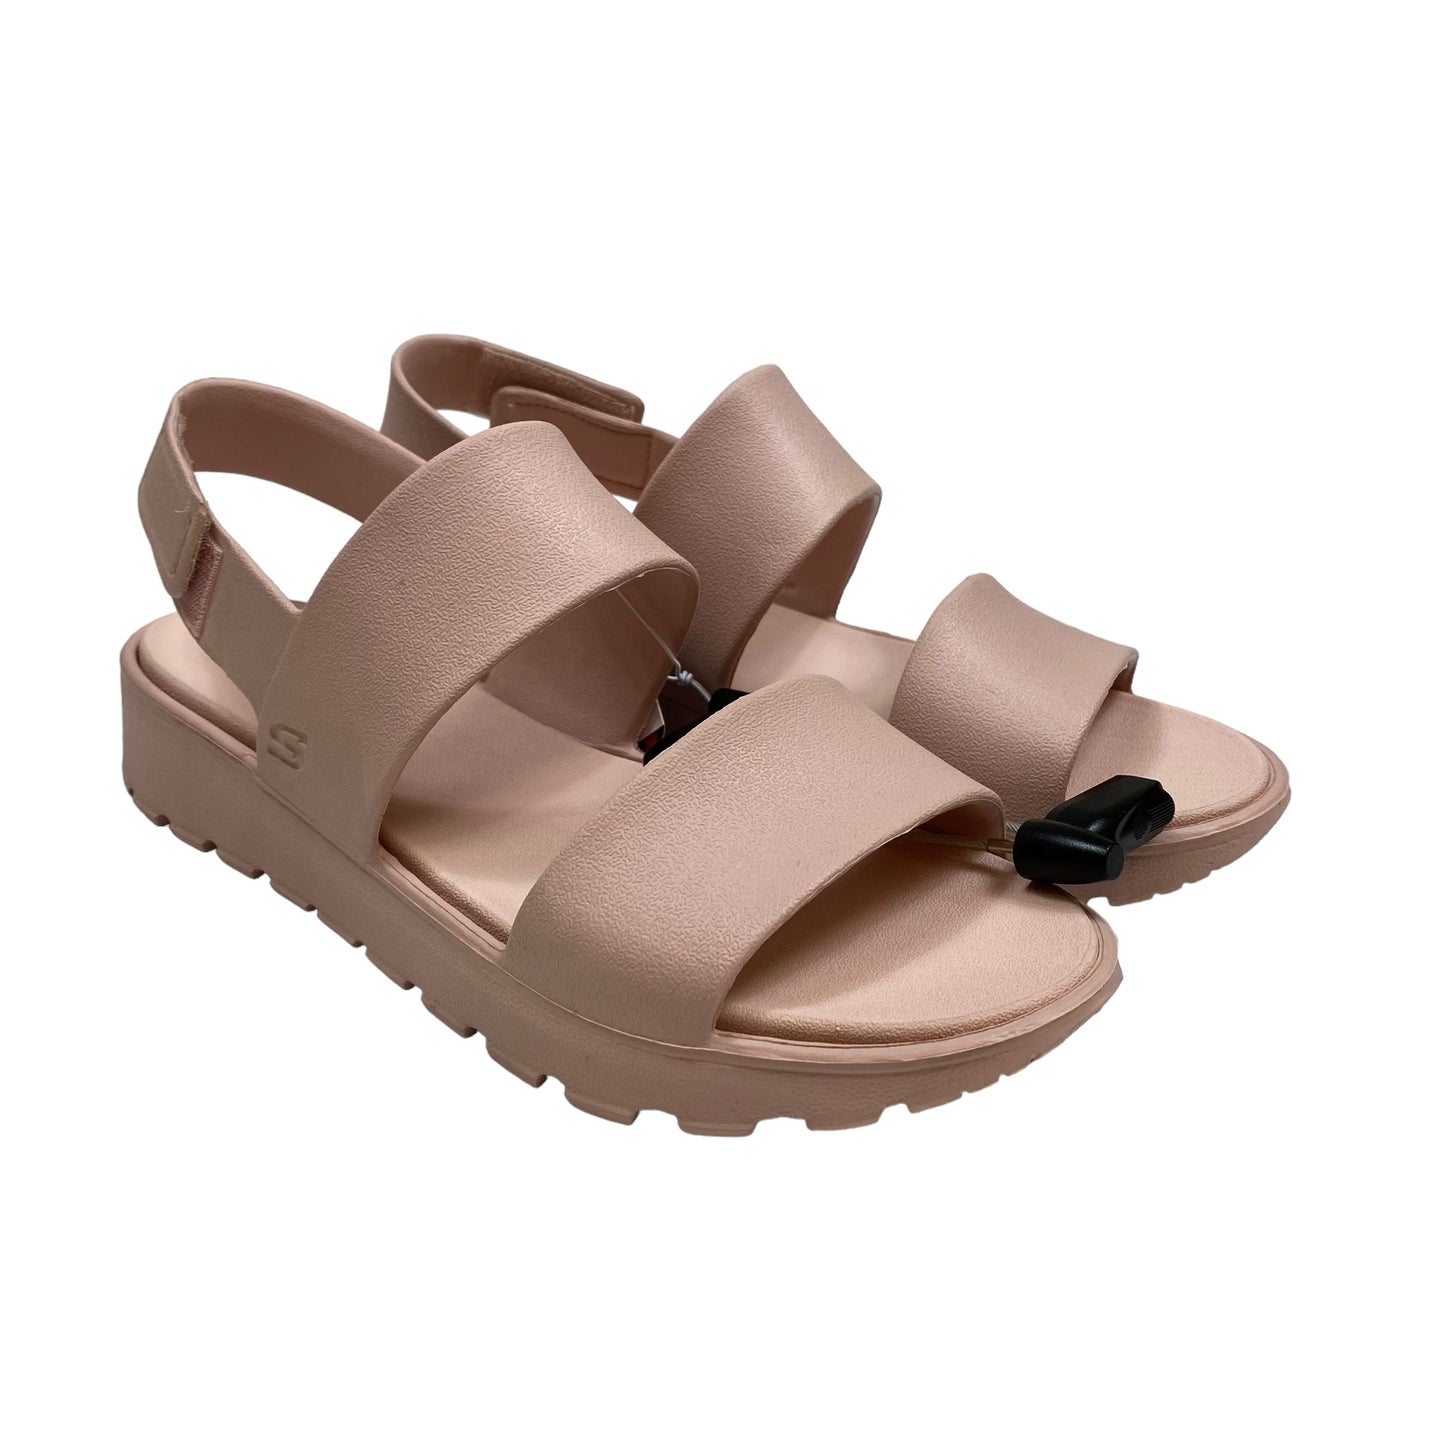 Pink Sandals Flats Skechers, Size 10